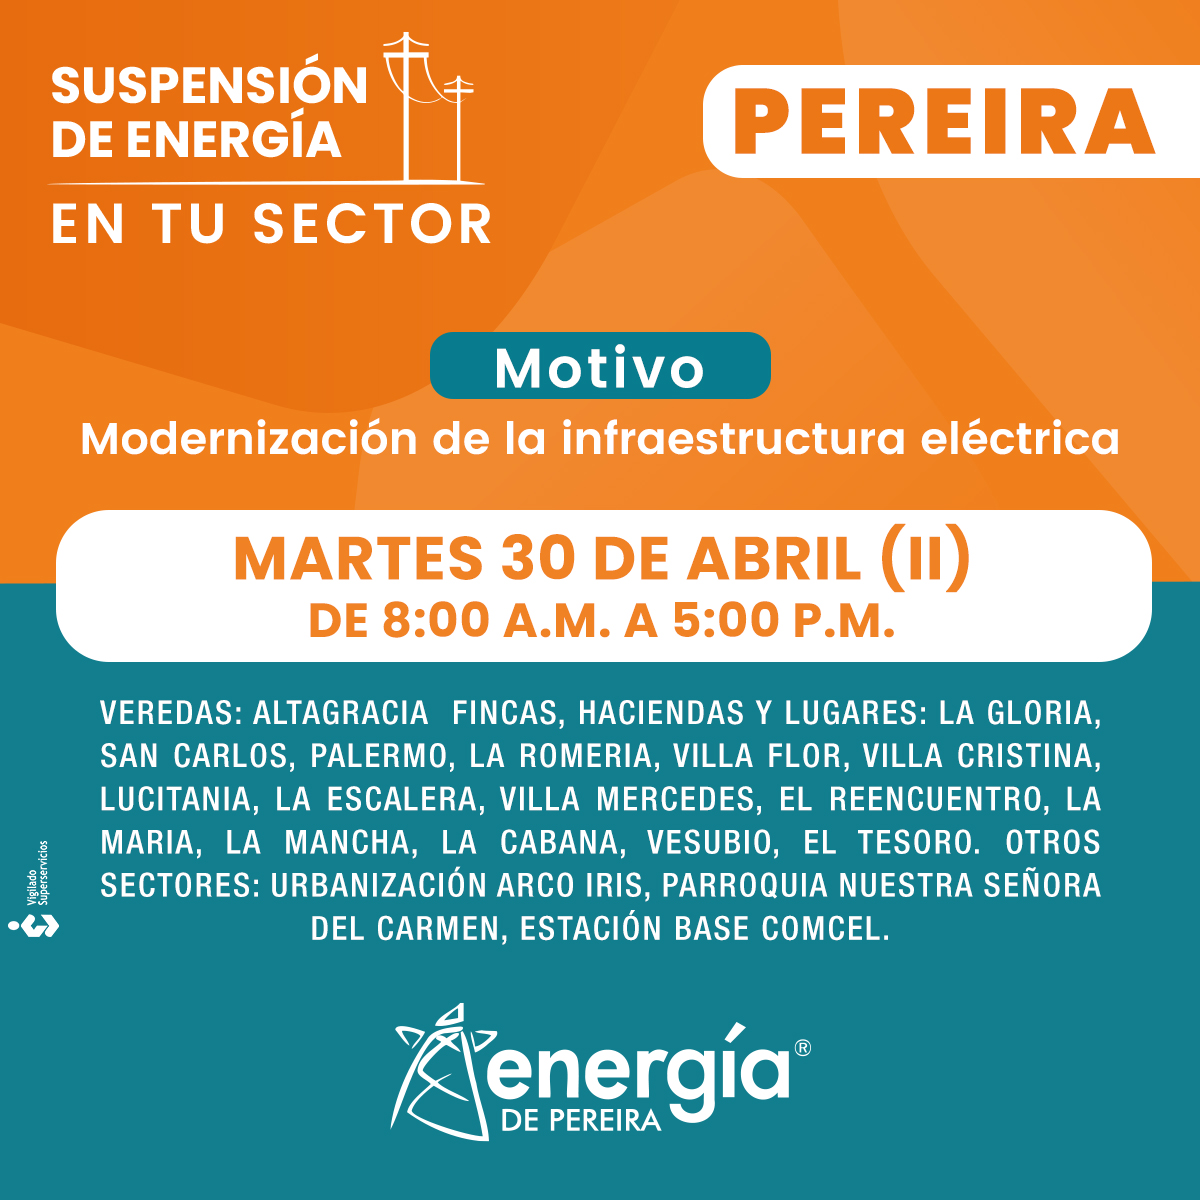 EnergiaPereira tweet picture